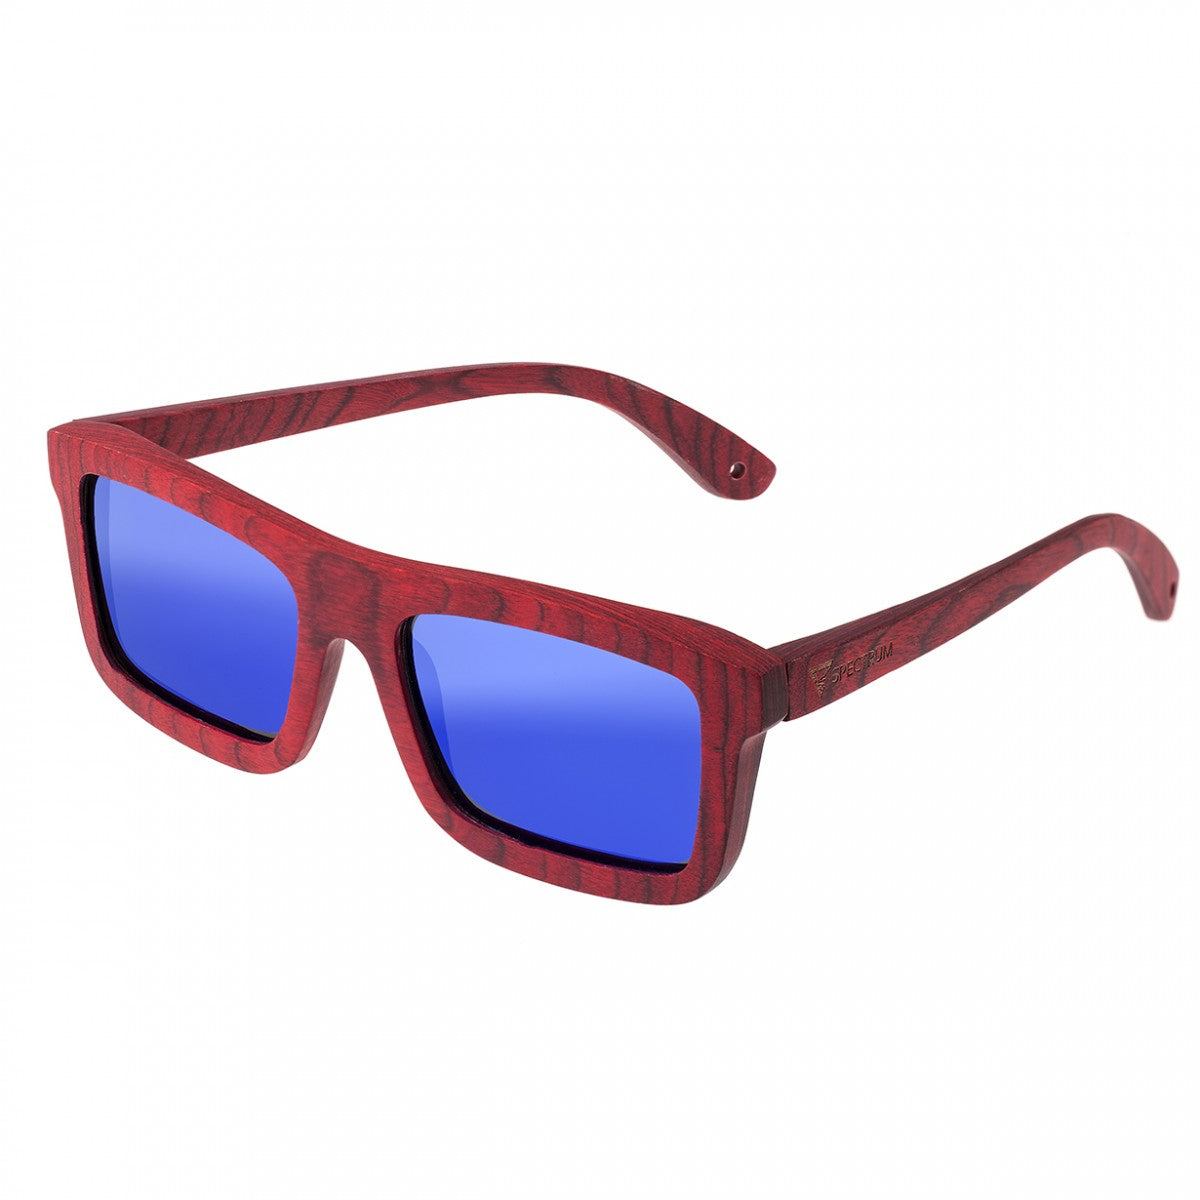 Spectrum Clark Wood Polarized Sunglasses - Cherry/Blue - SSGS119BL